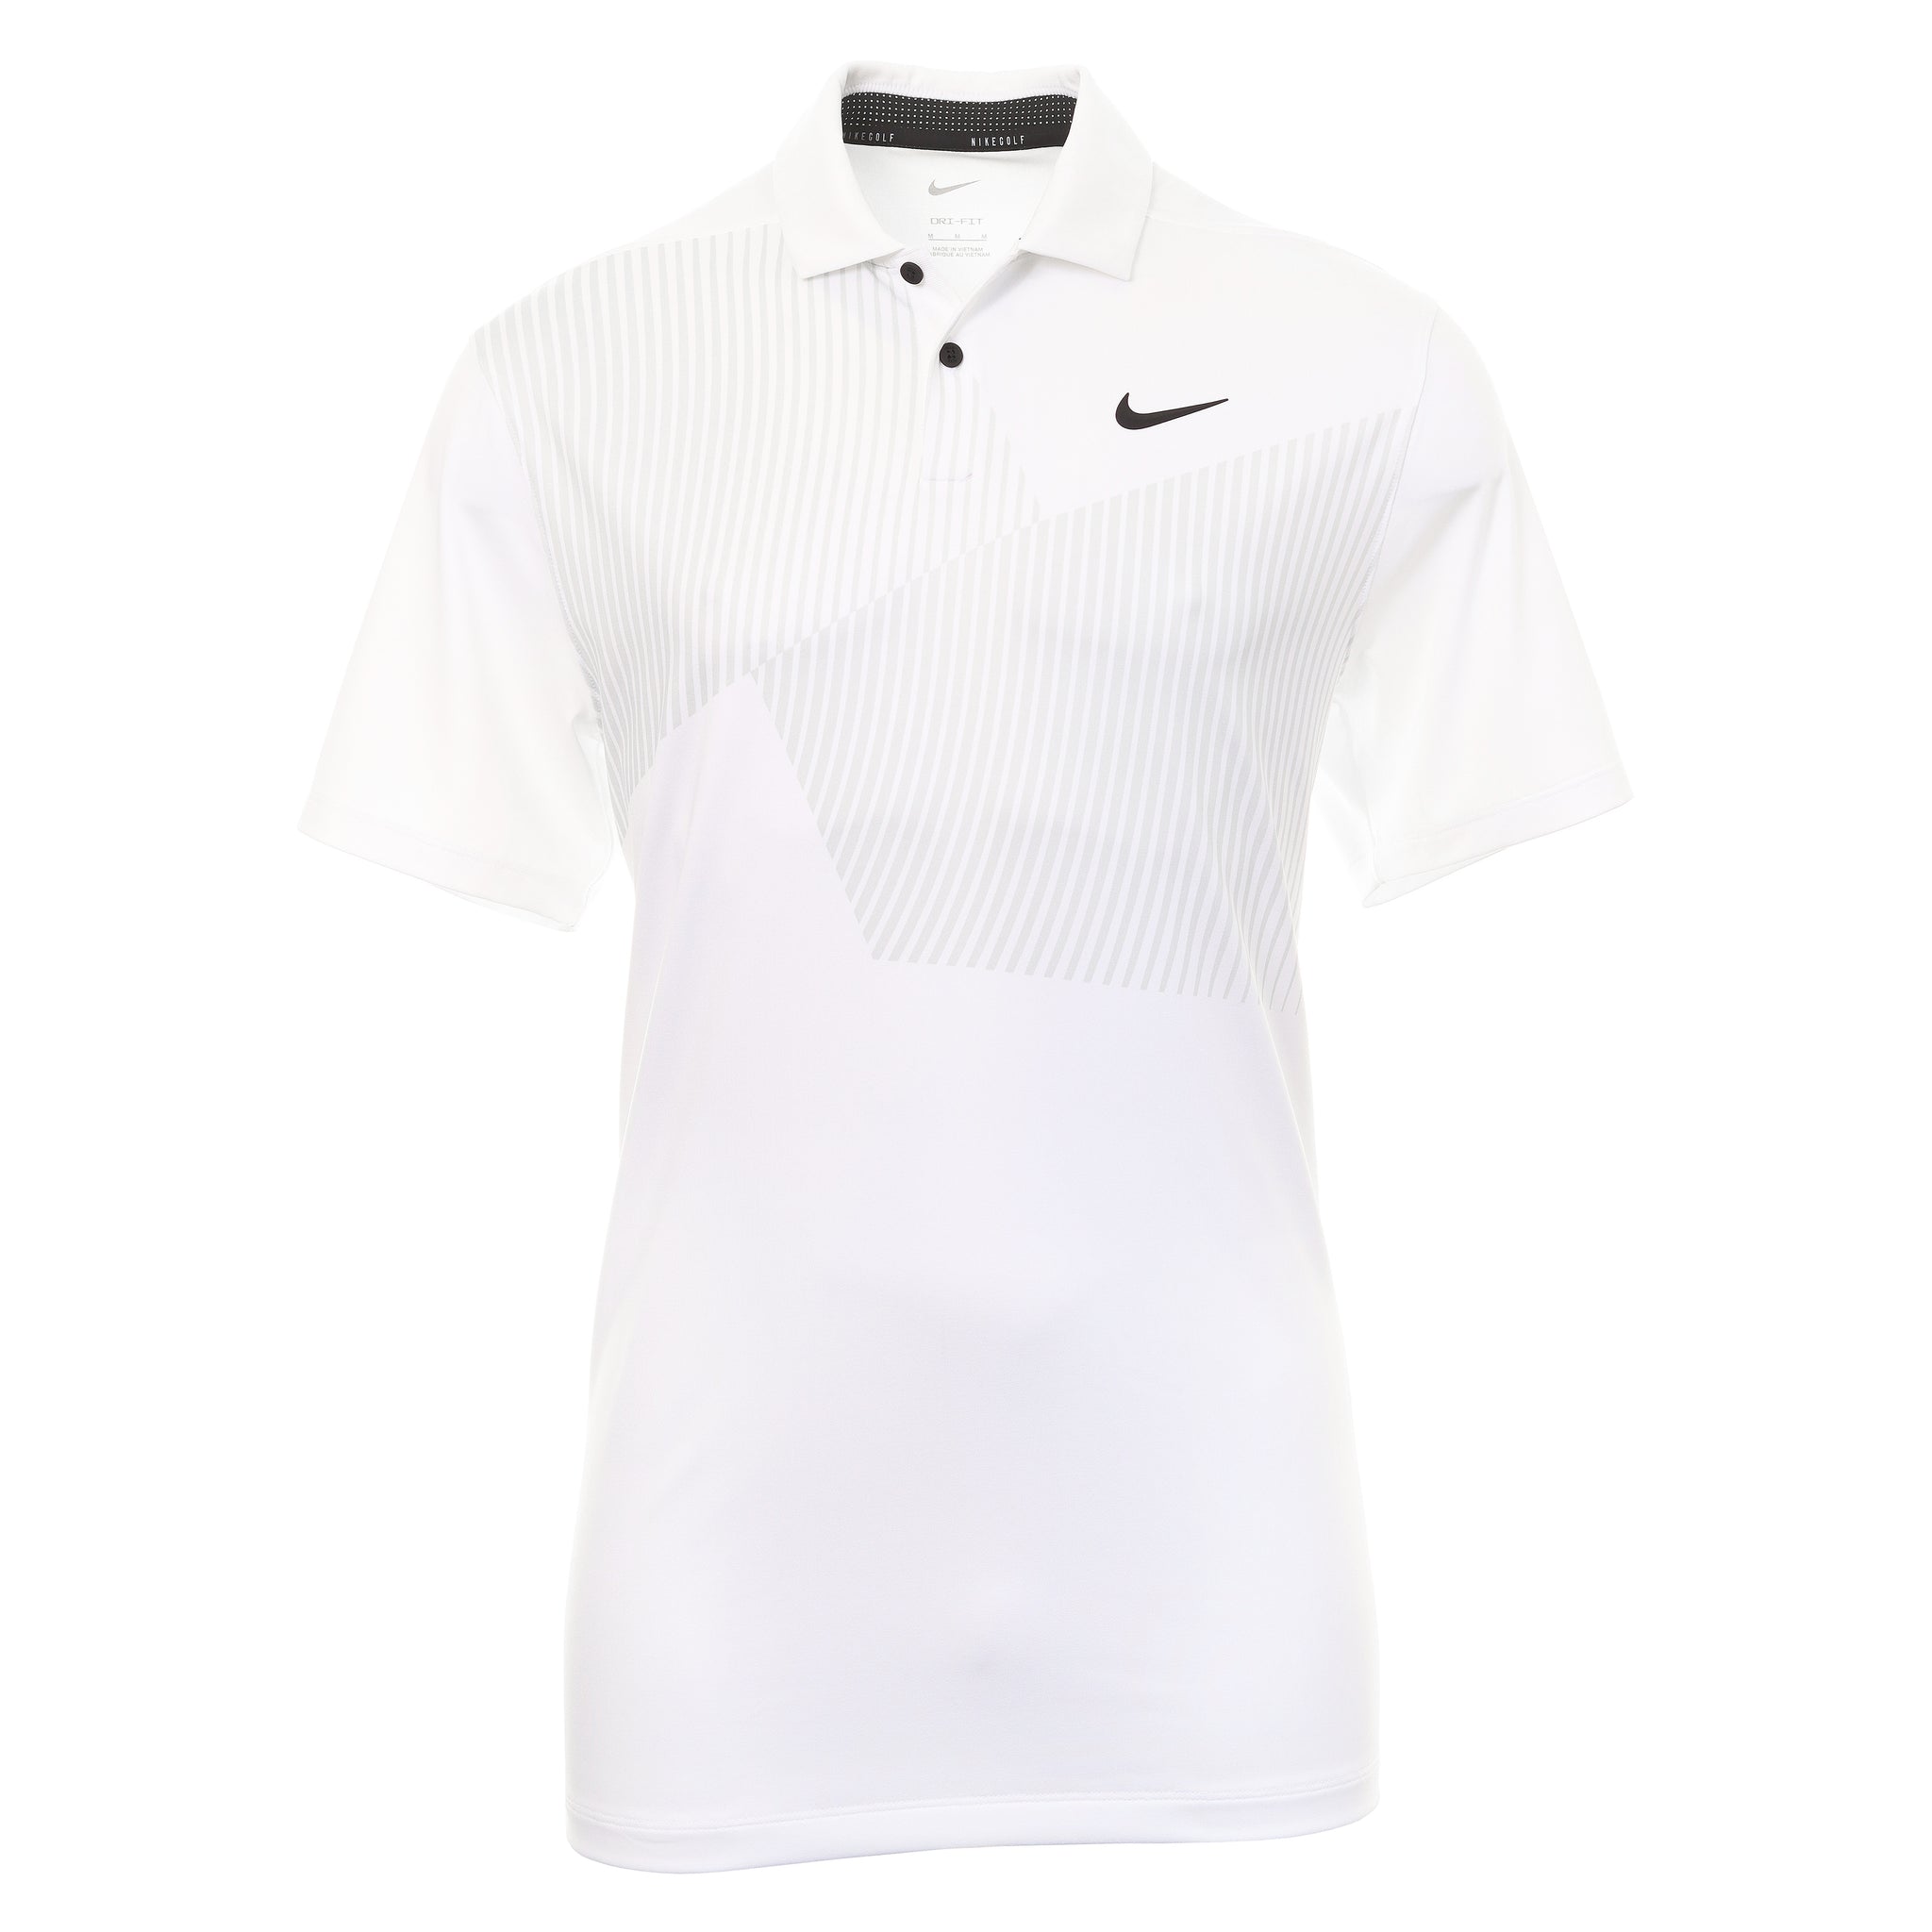 Nike Golf Dry Vapor Graphic Shirt DN2257 White 100 | Function18 ...